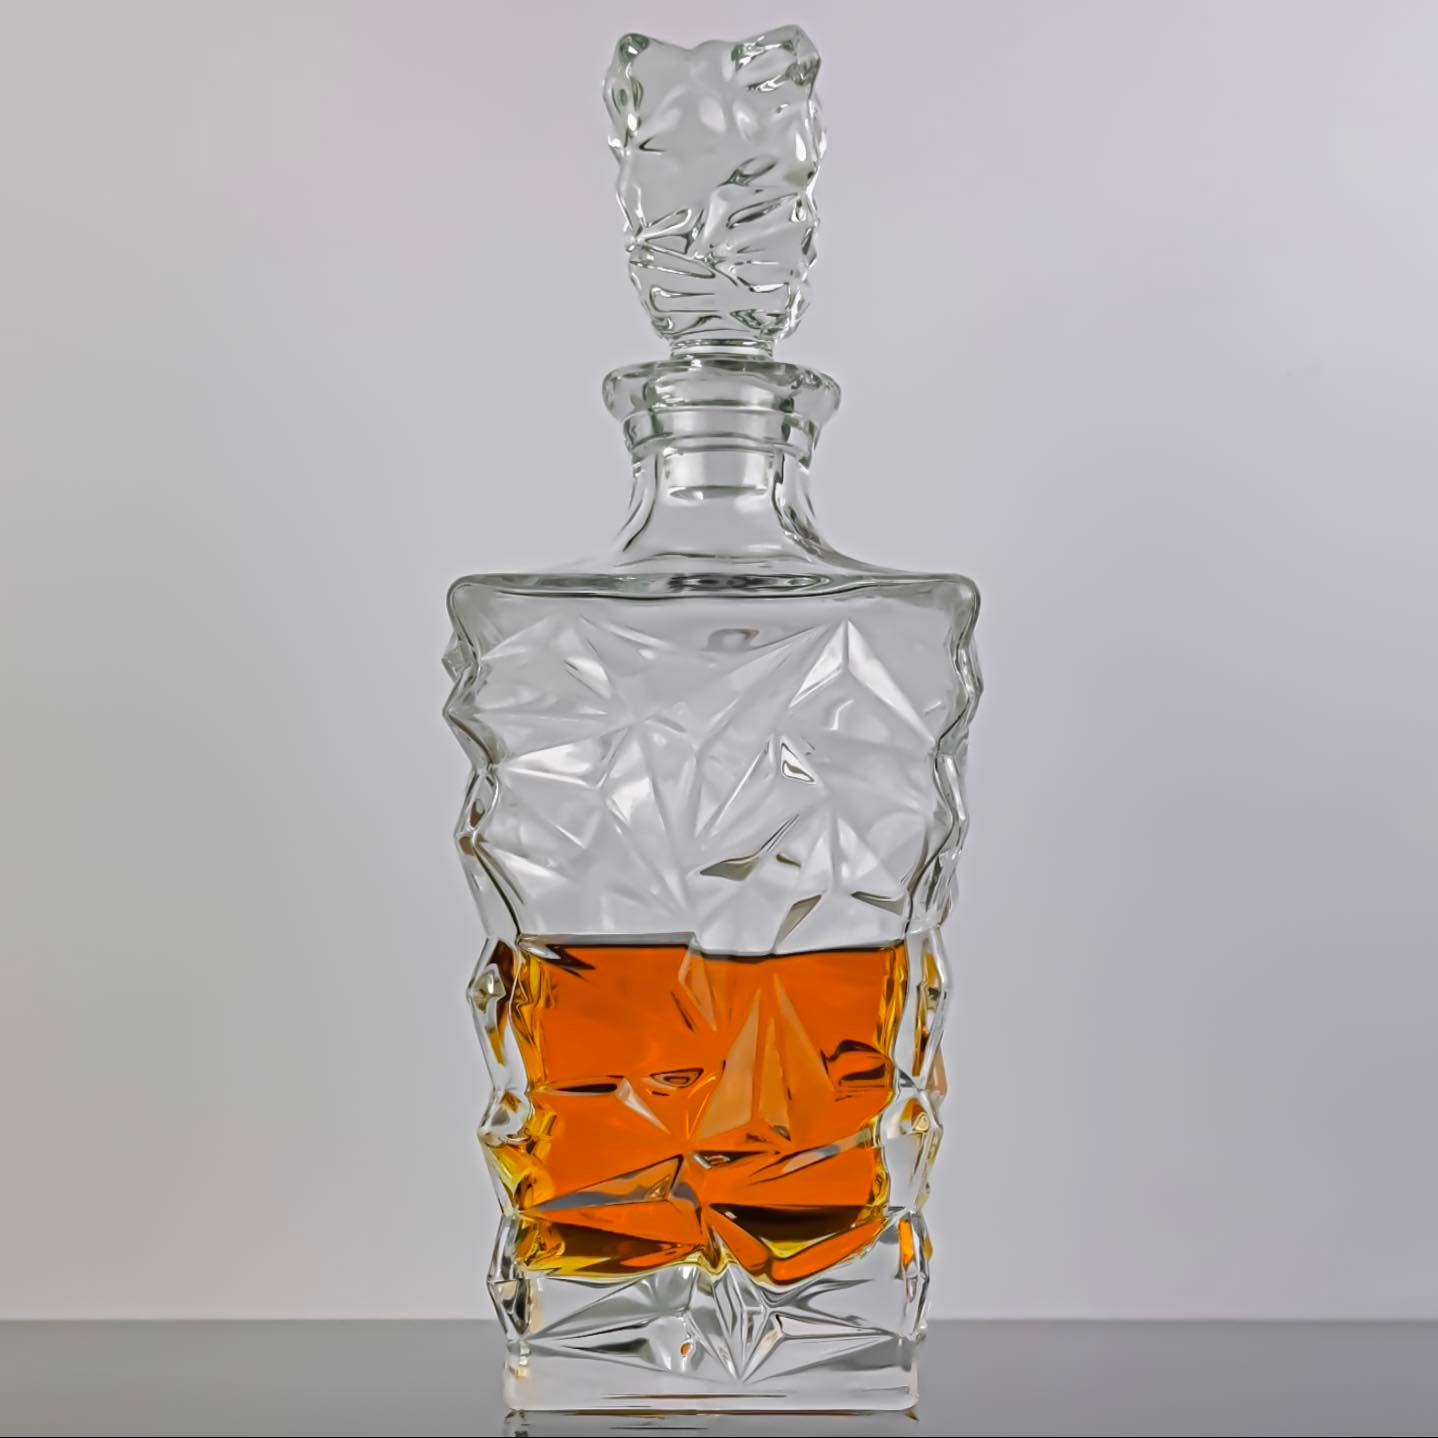 Jagged Edge Whisky Decanter and 4 Glass Set – Solkatt Designs